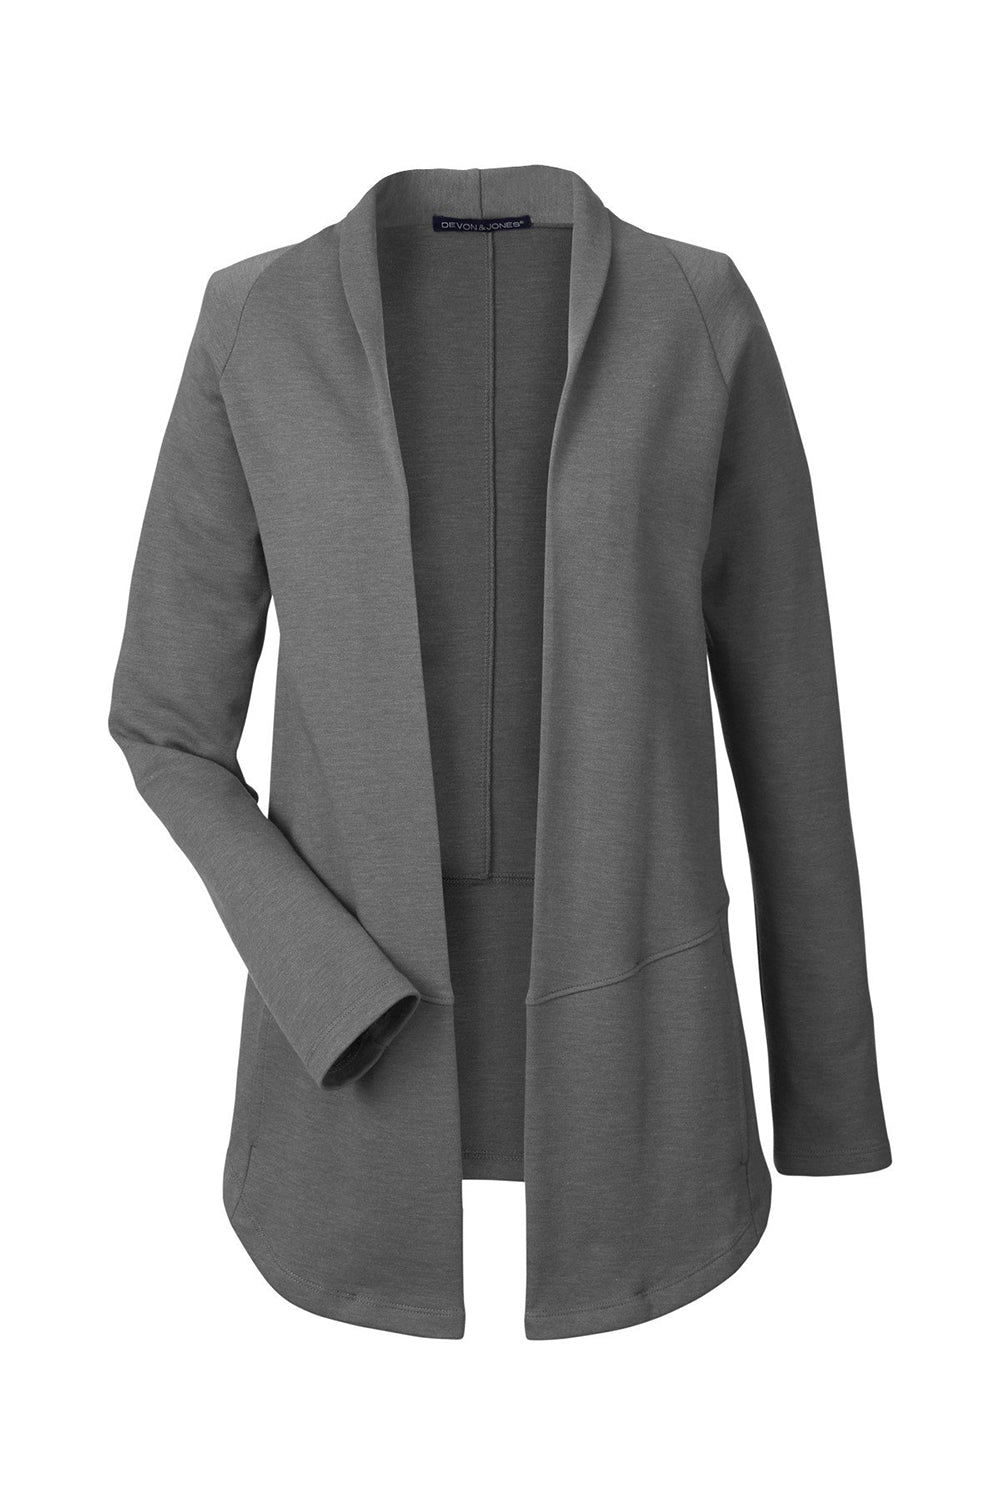 Devon & Jones DG481W Womens New Classics Charleston Cardigan Sweater Graphite Grey Melange Flat Front